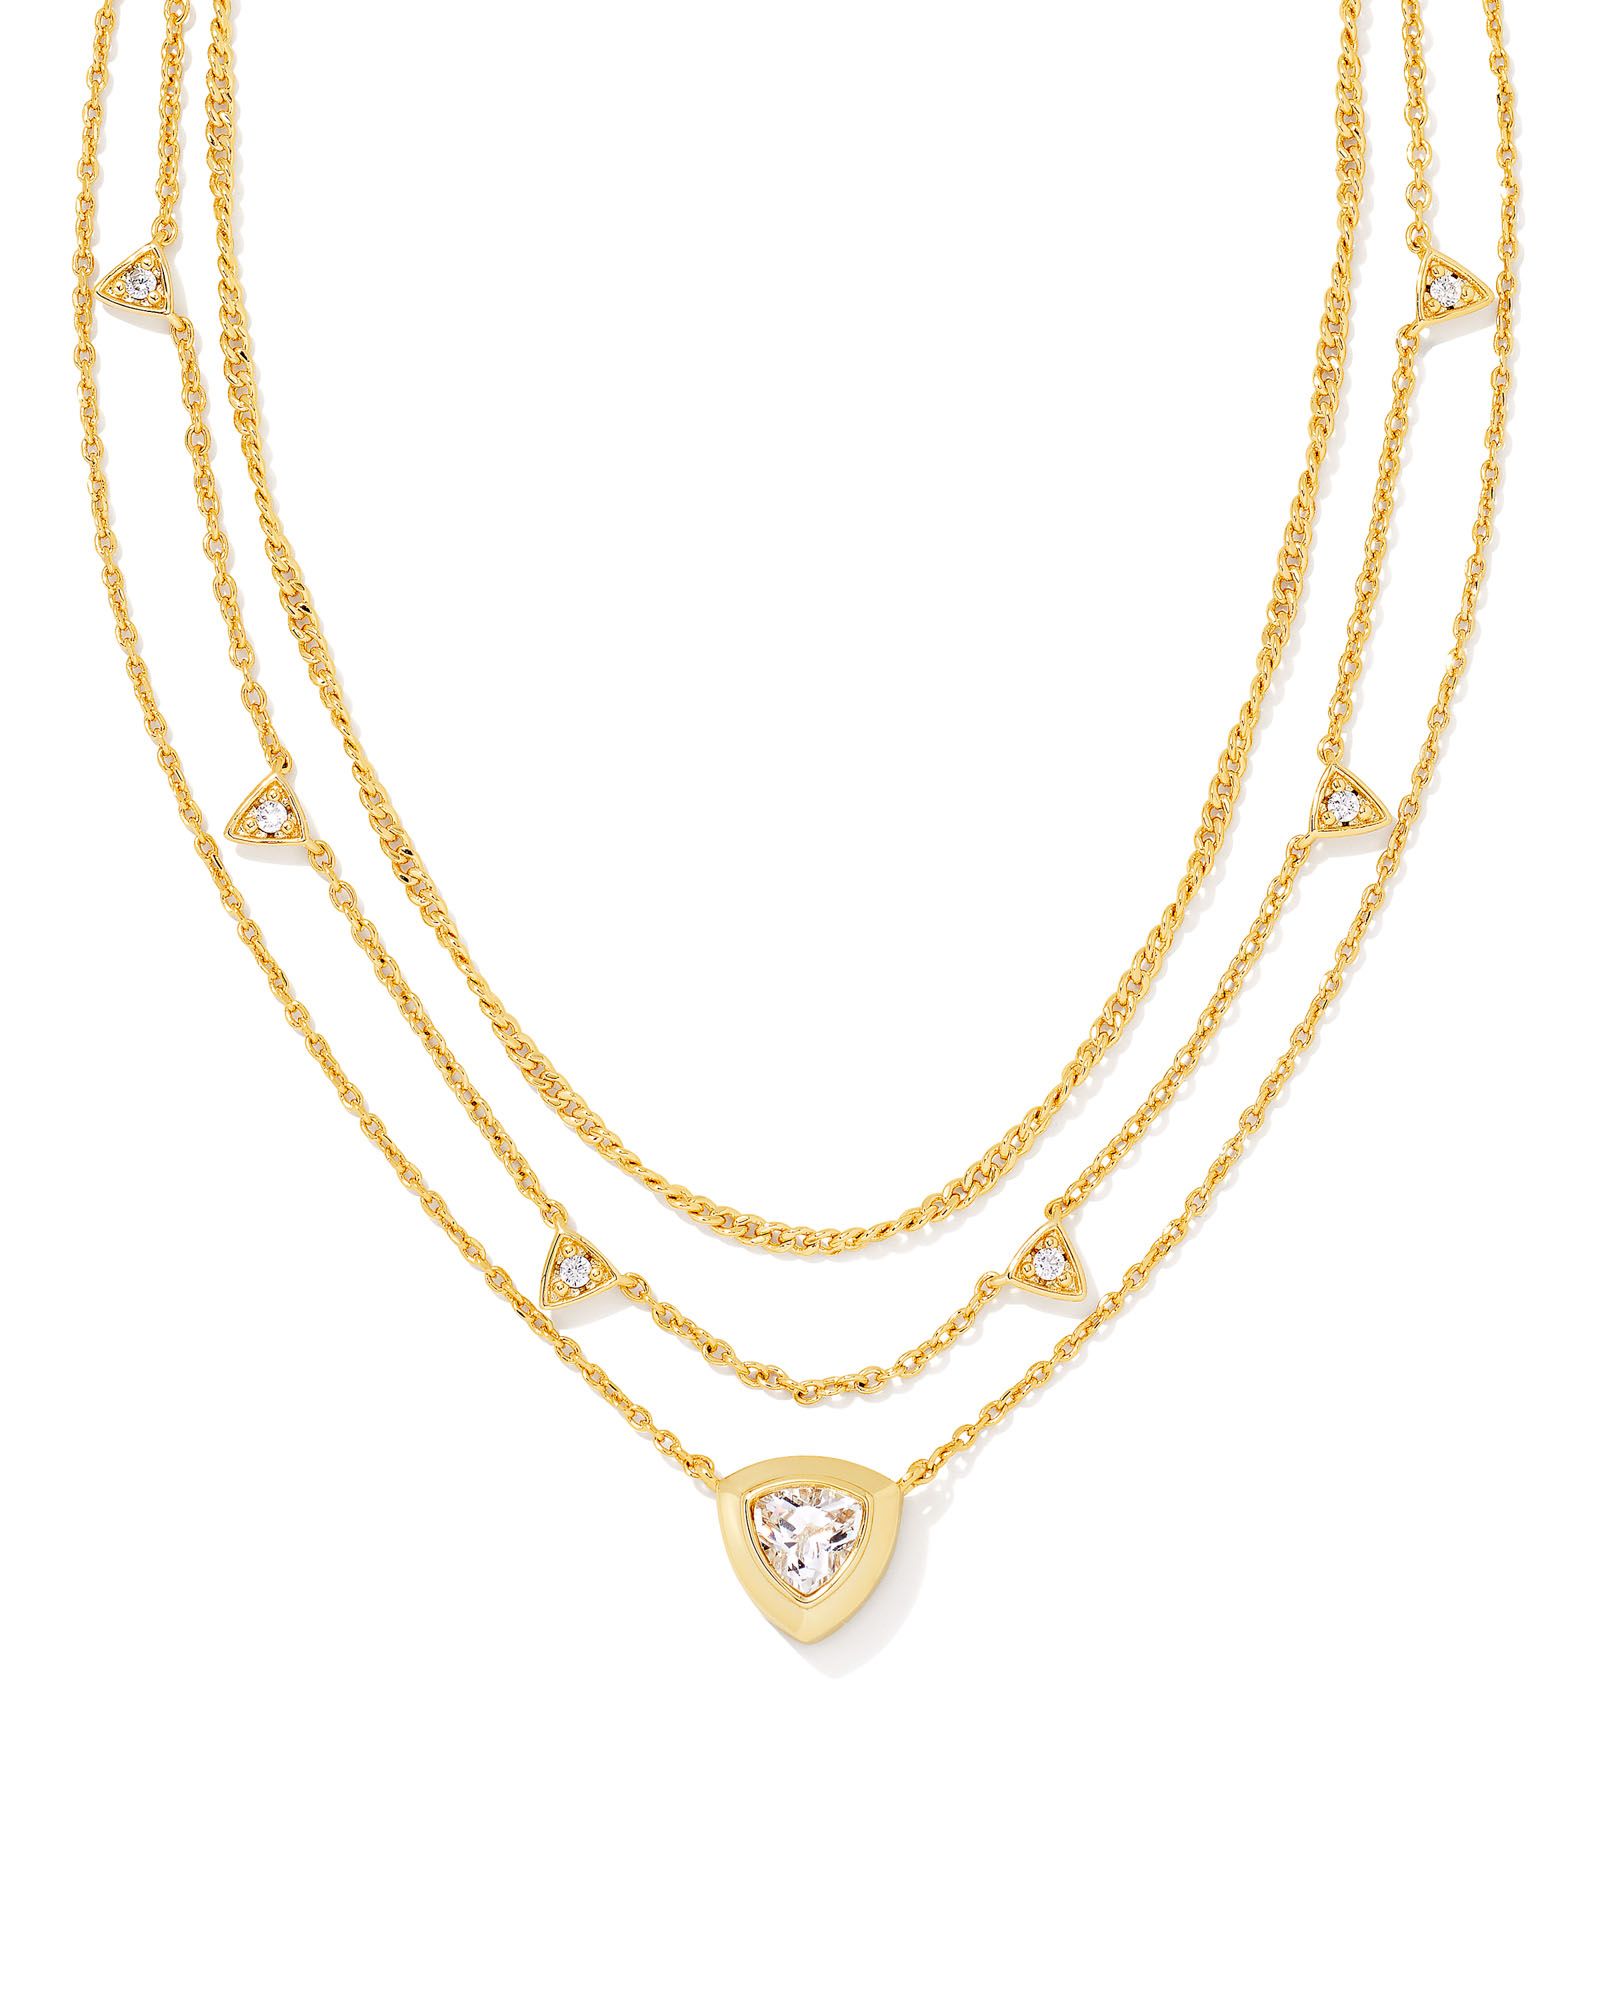 Arden Gold Multi Strand Necklace in White Crystal | Kendra Scott | Kendra Scott